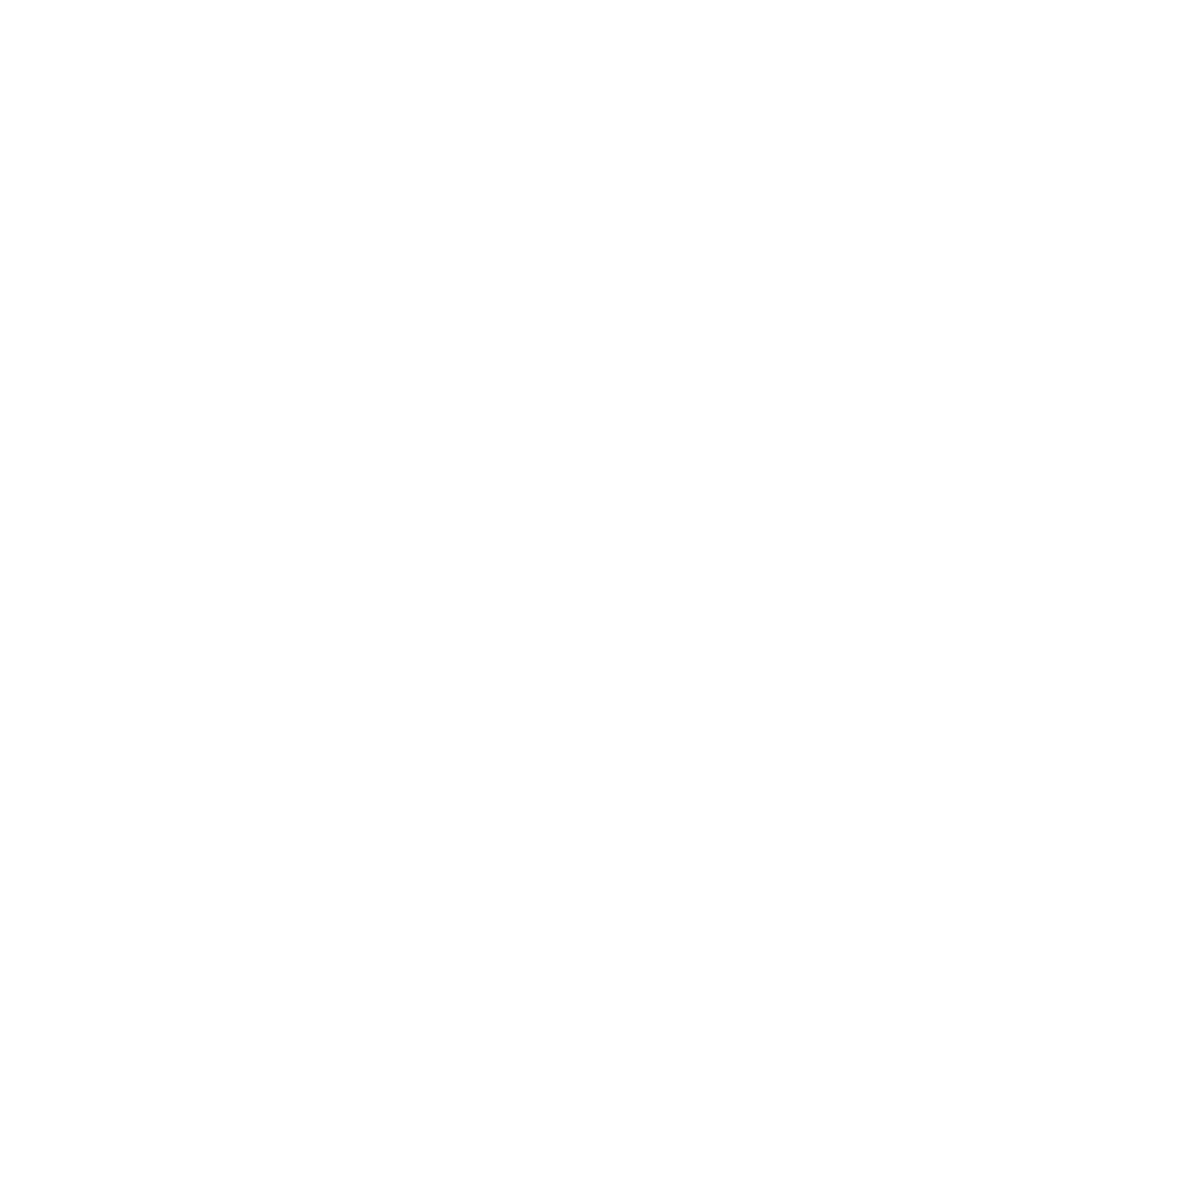 Bynon Art Services